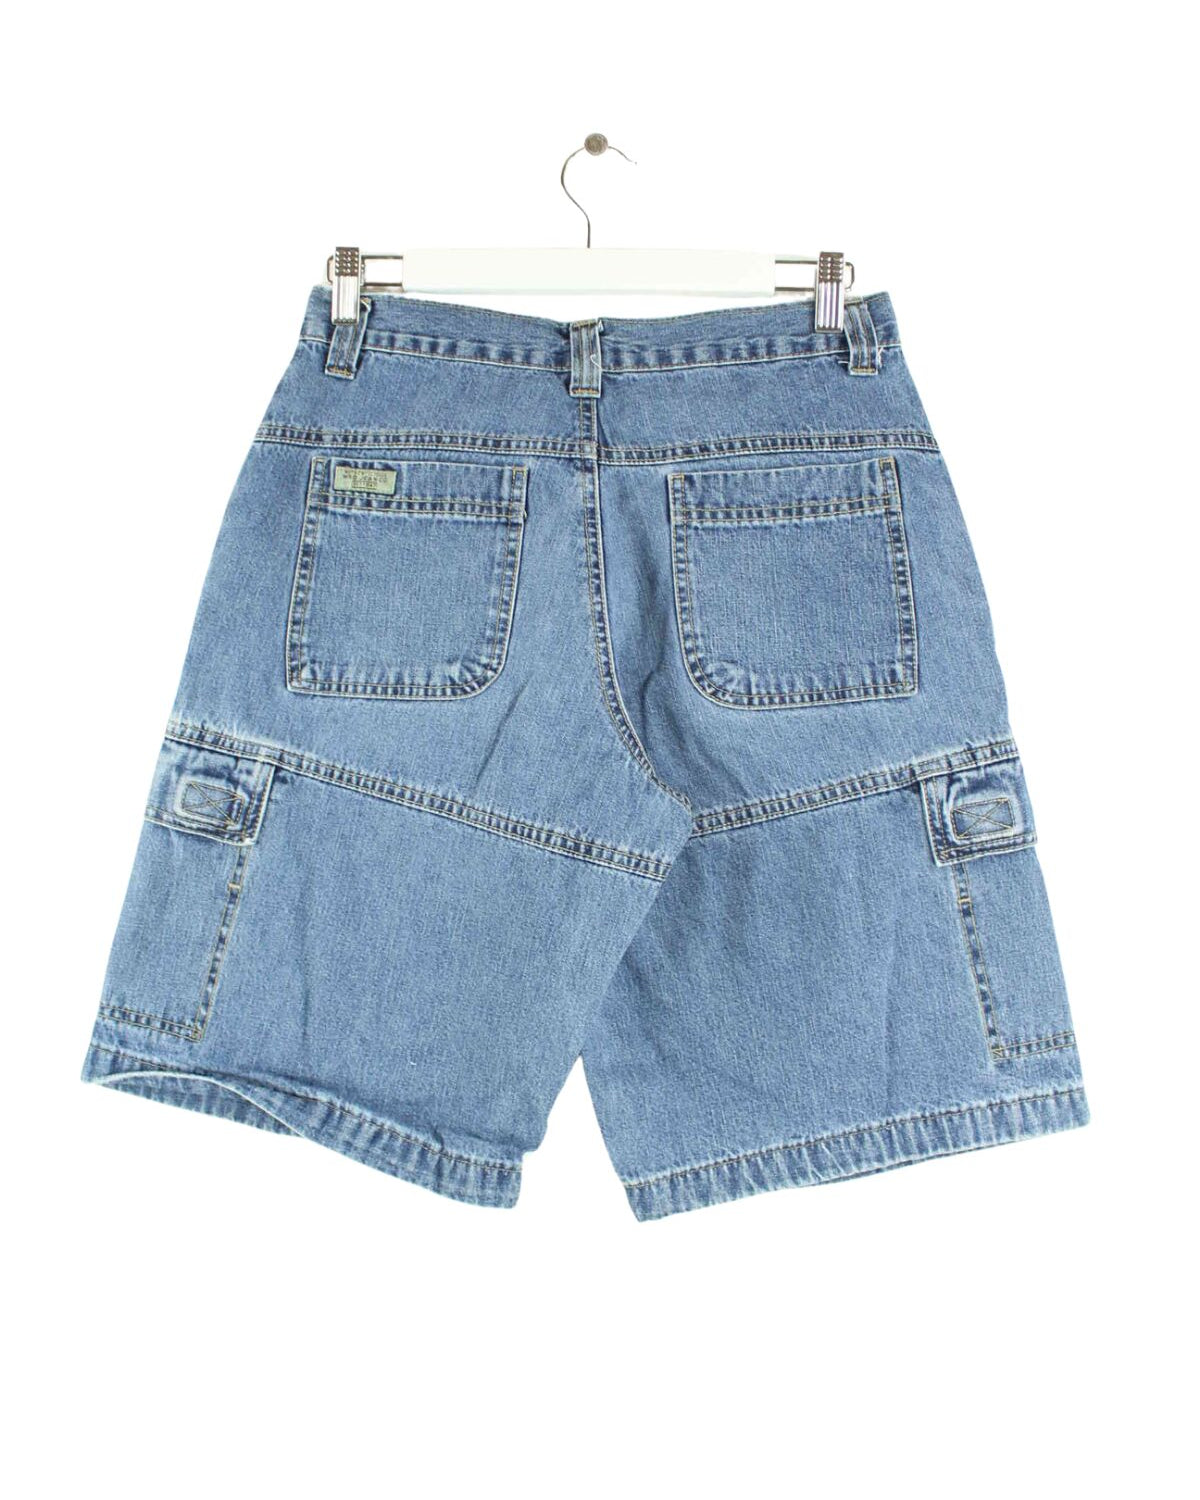 Wrangler Carpenter Jorts / Jeans Shorts Blau W26 (back image)